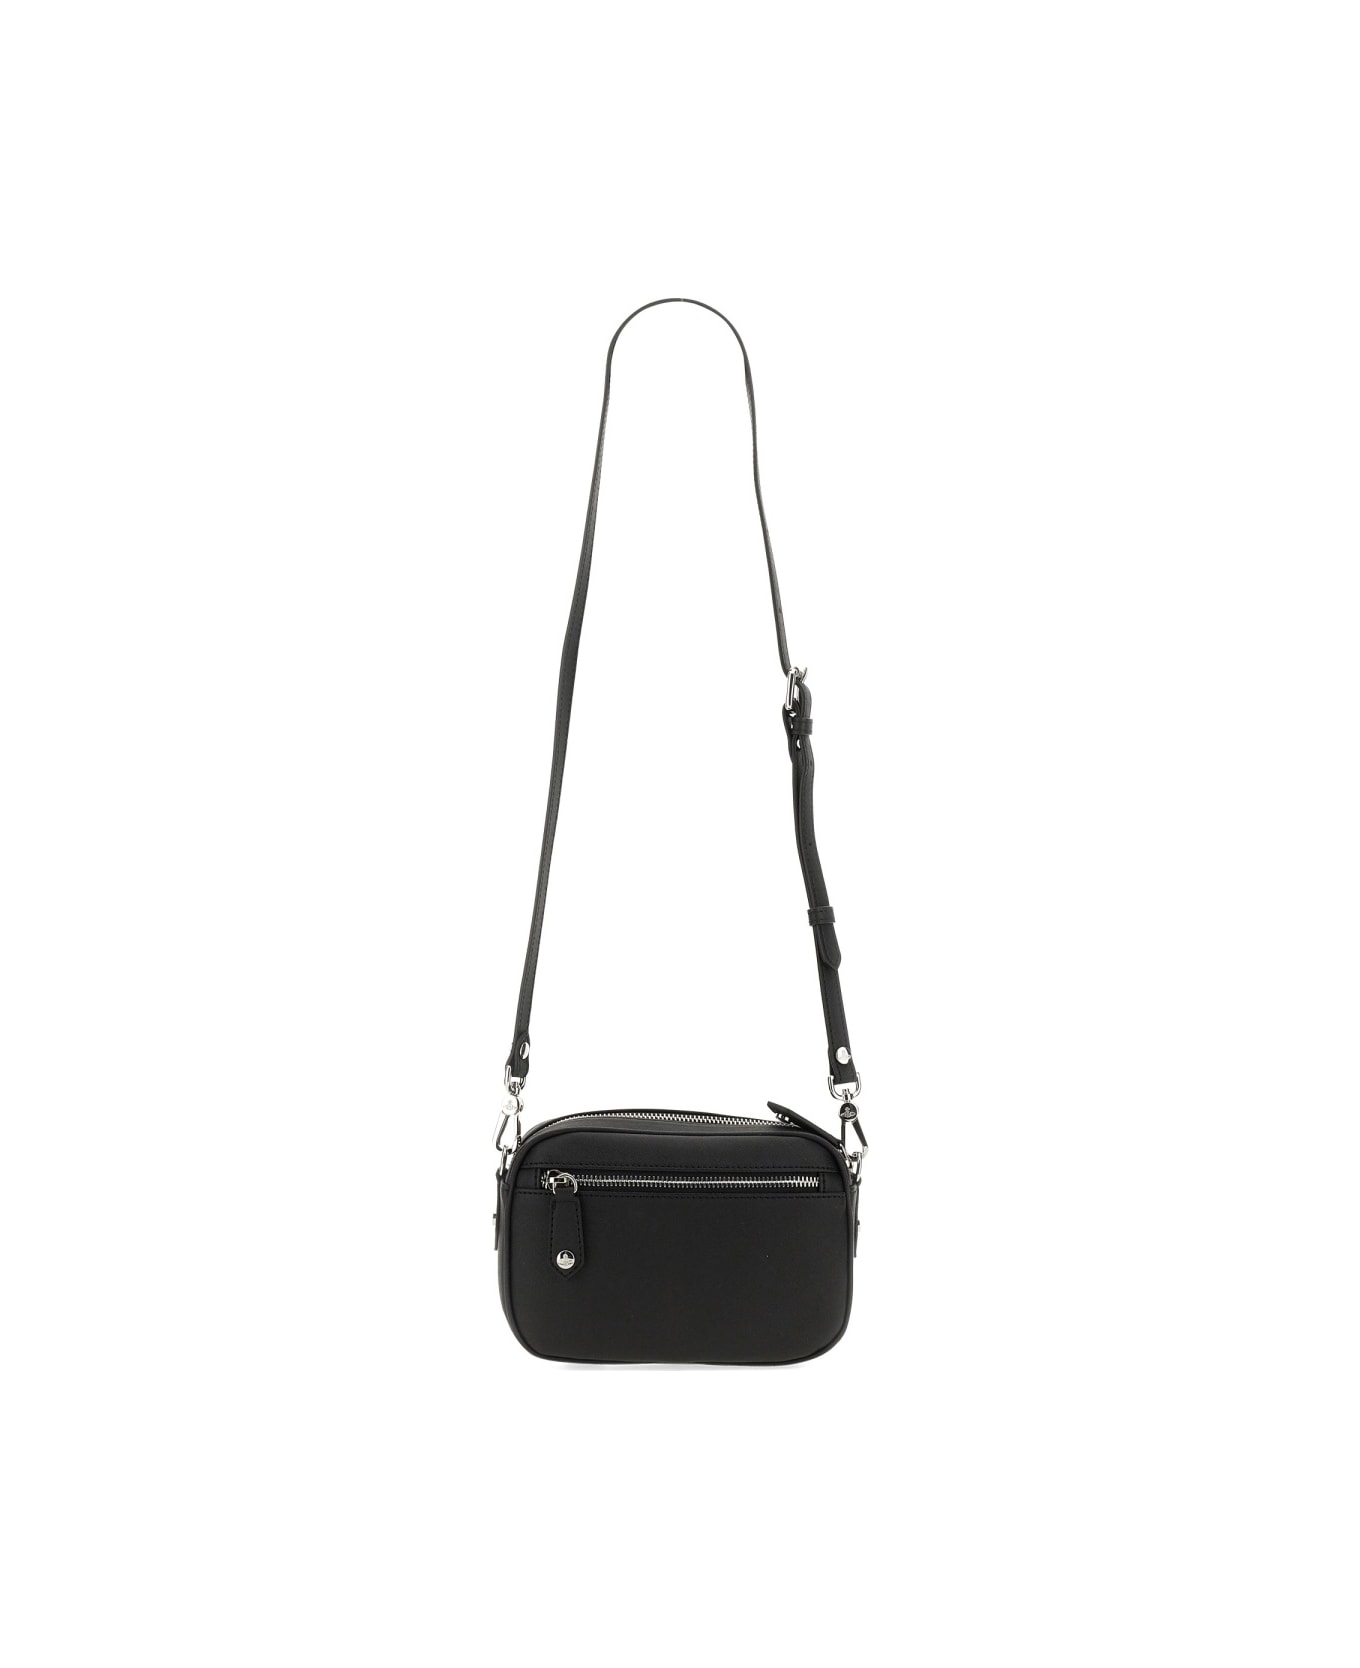 Vivienne Westwood Room Bag "anna" - BLACK